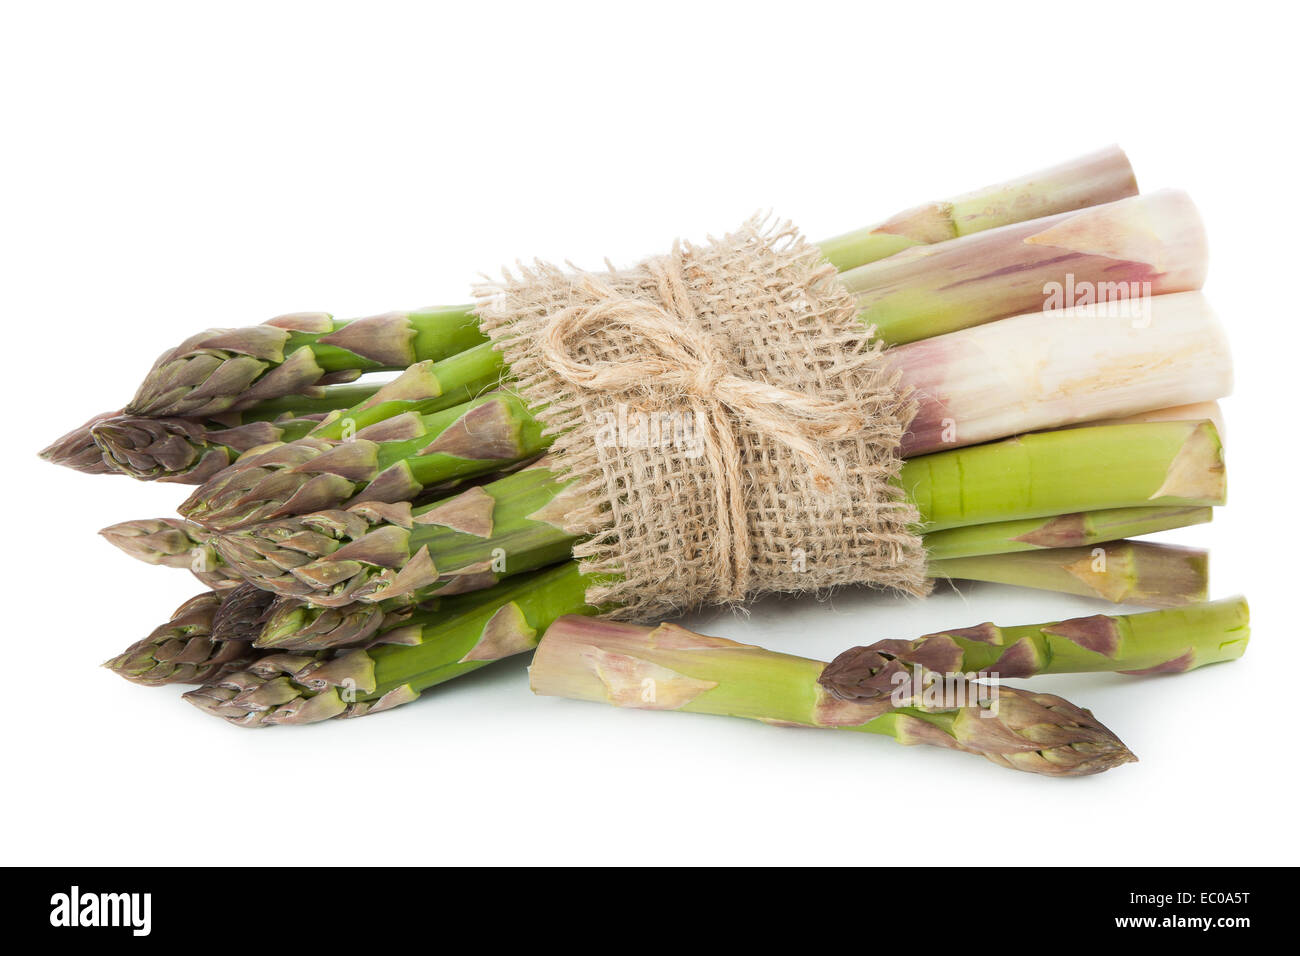 Green asparagus on white background Stock Photo